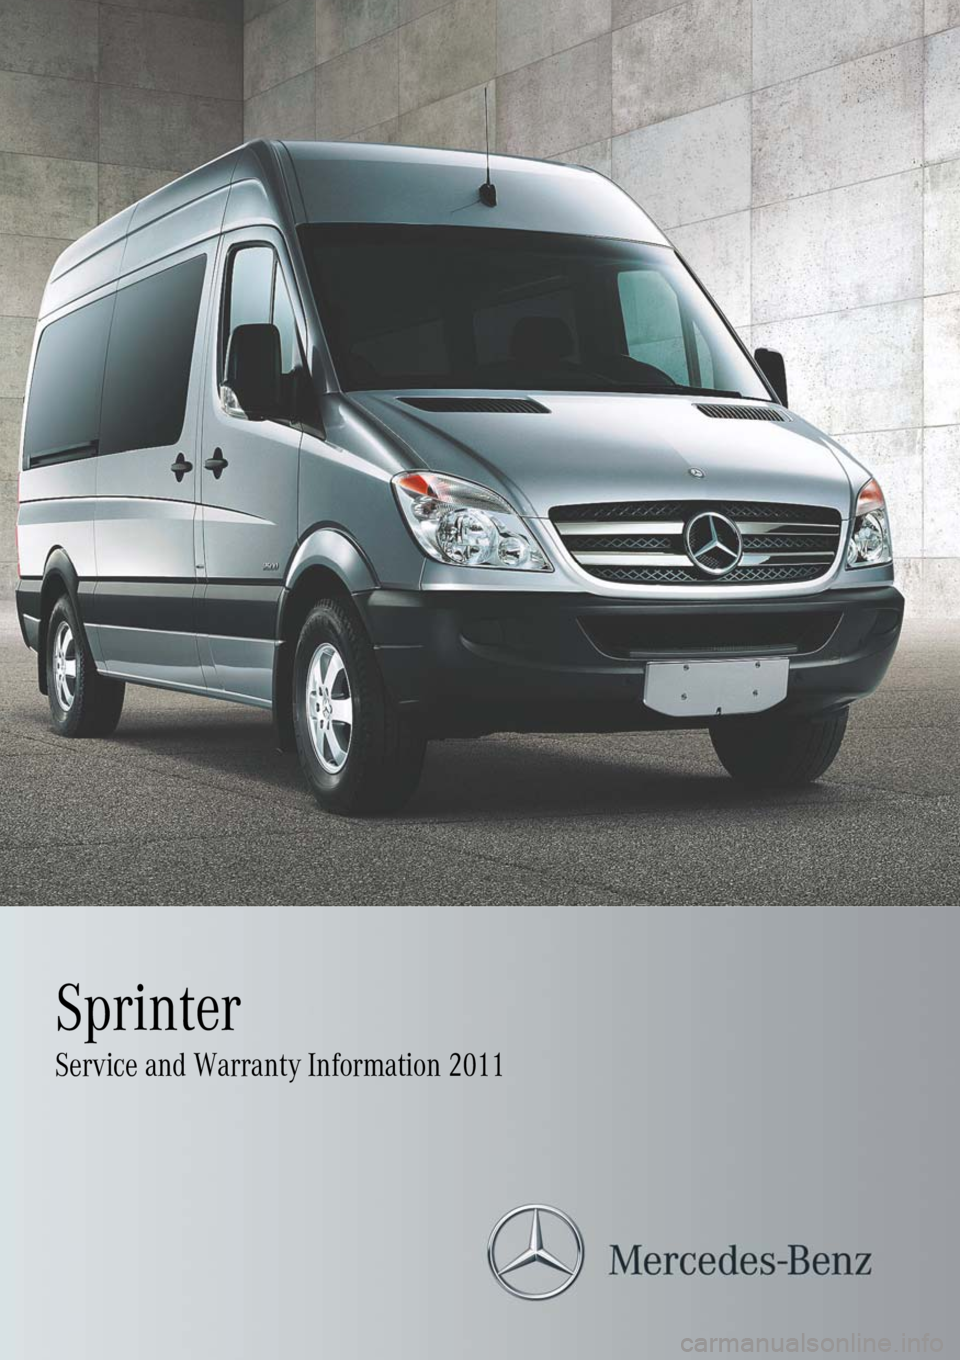 MERCEDES-BENZ SPRINTER 2012  MY12 Warranty Manual Sprinter
Service and Warranty Information 2011 